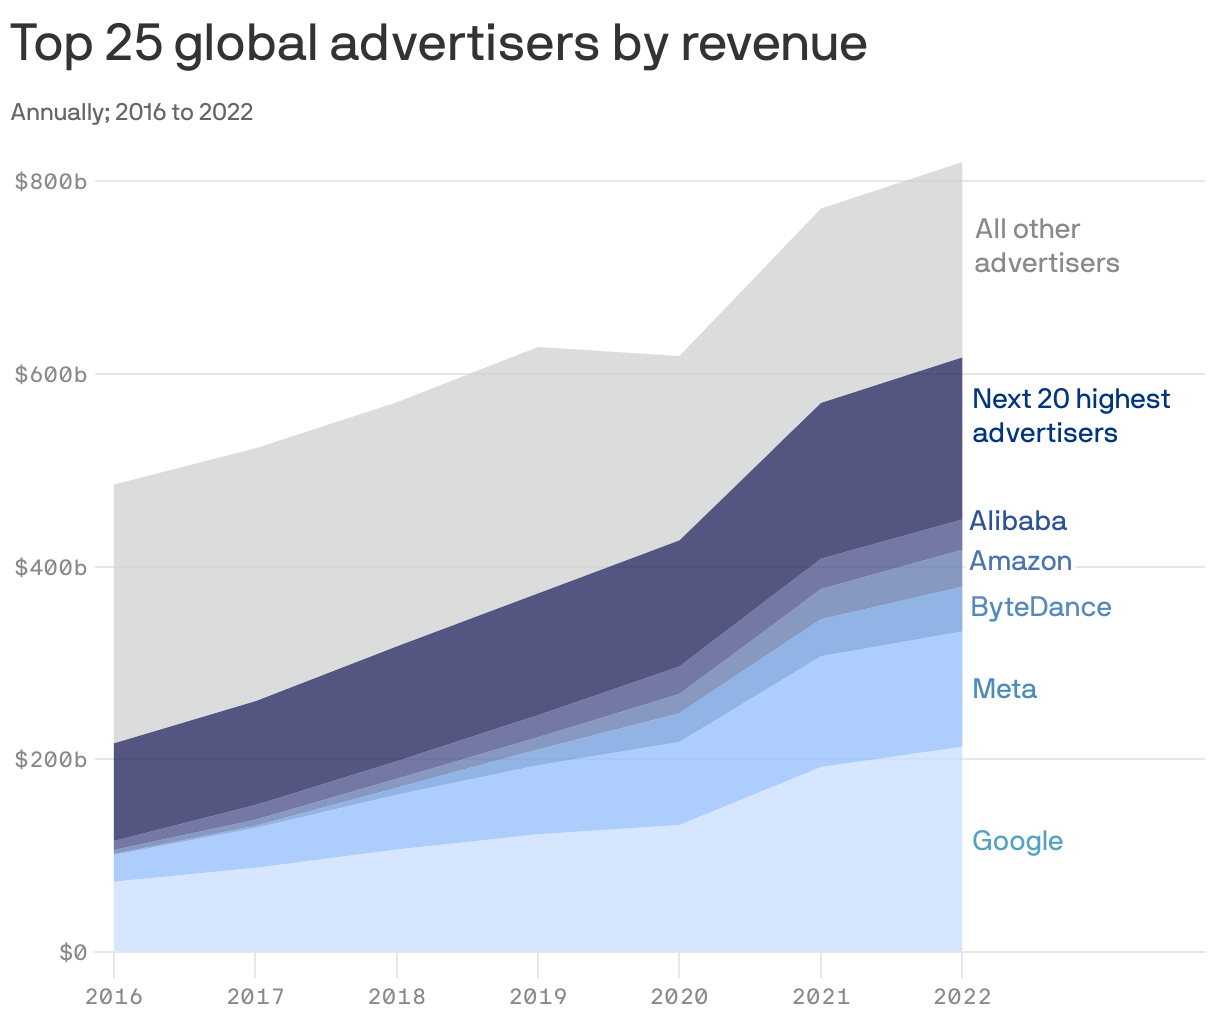 Top 25 global advertisers by revenue